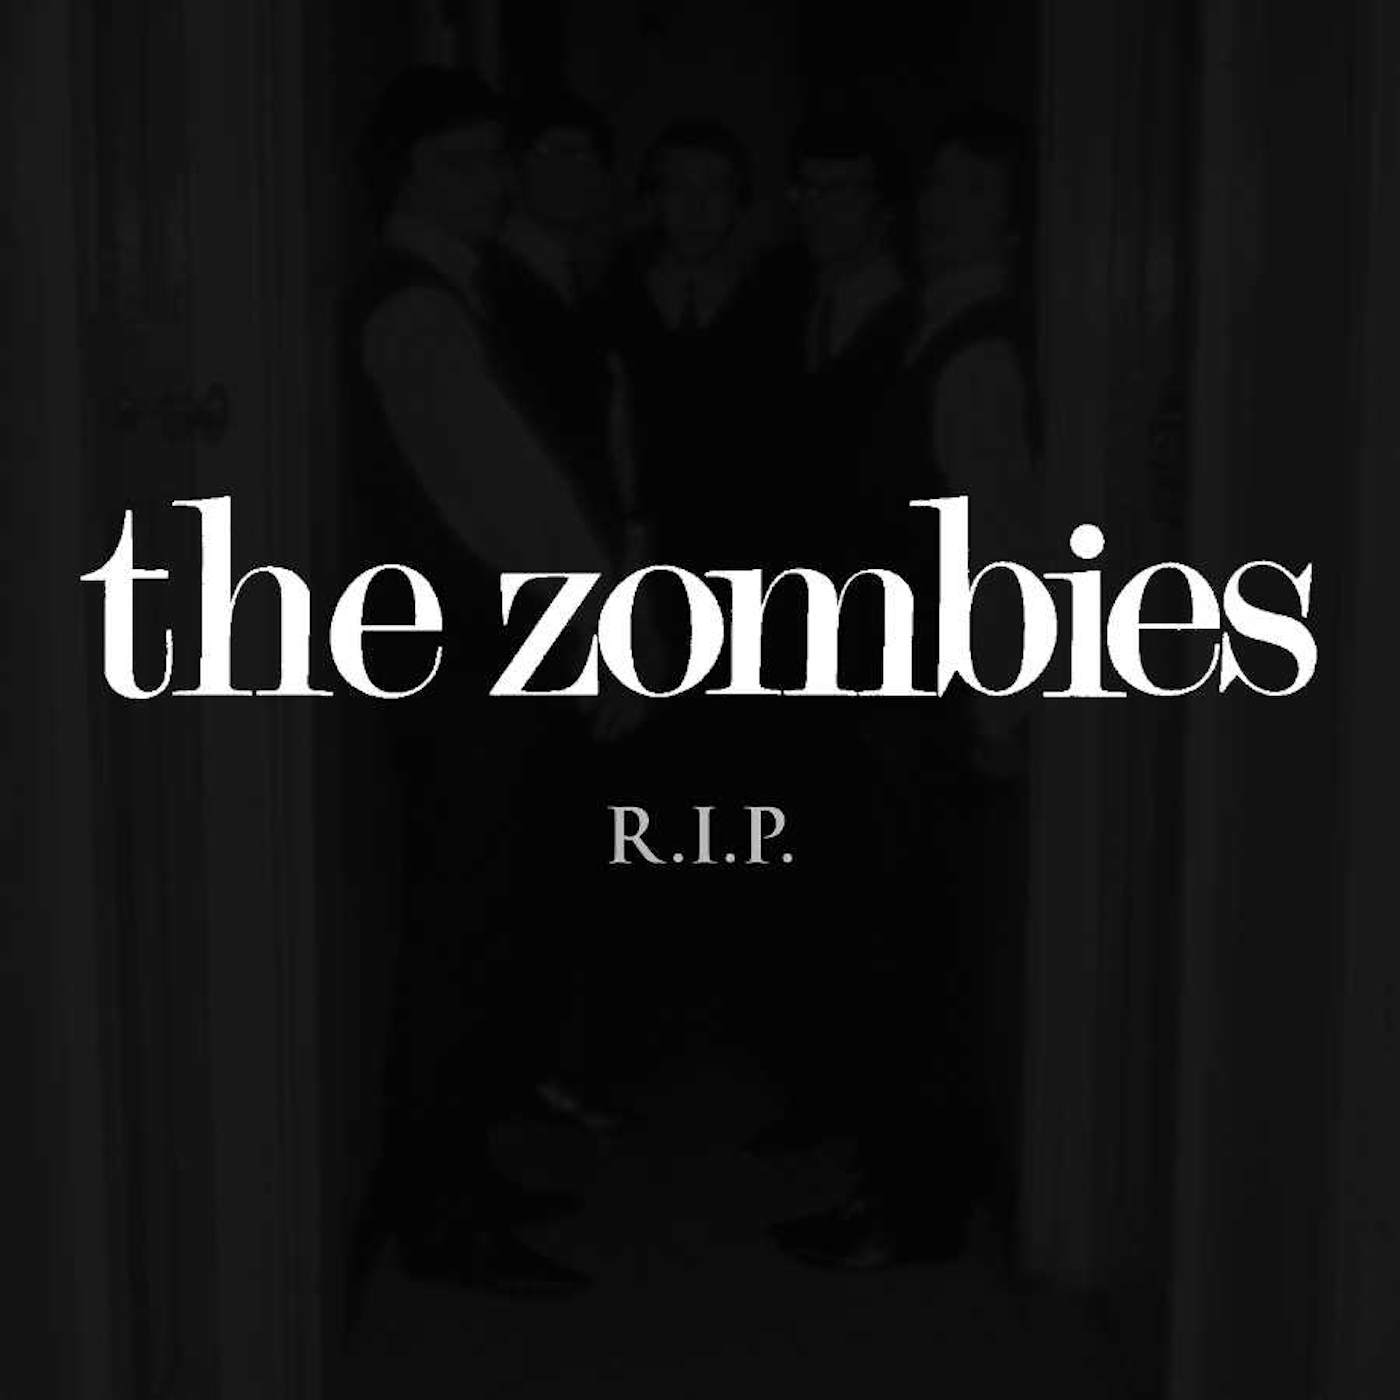 The Zombies R.I.P. Vinyl Record